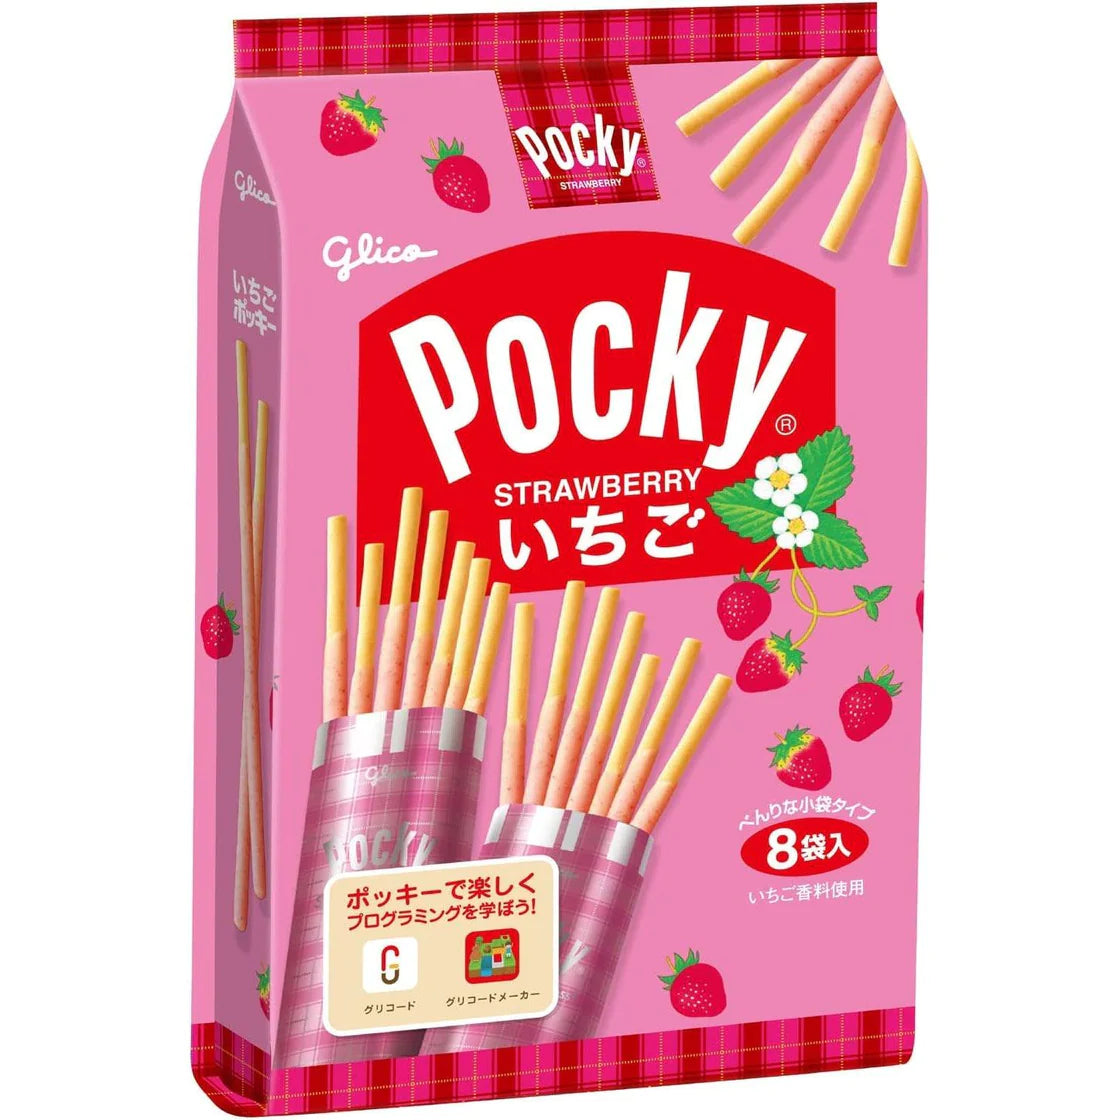 Japanese Pocky